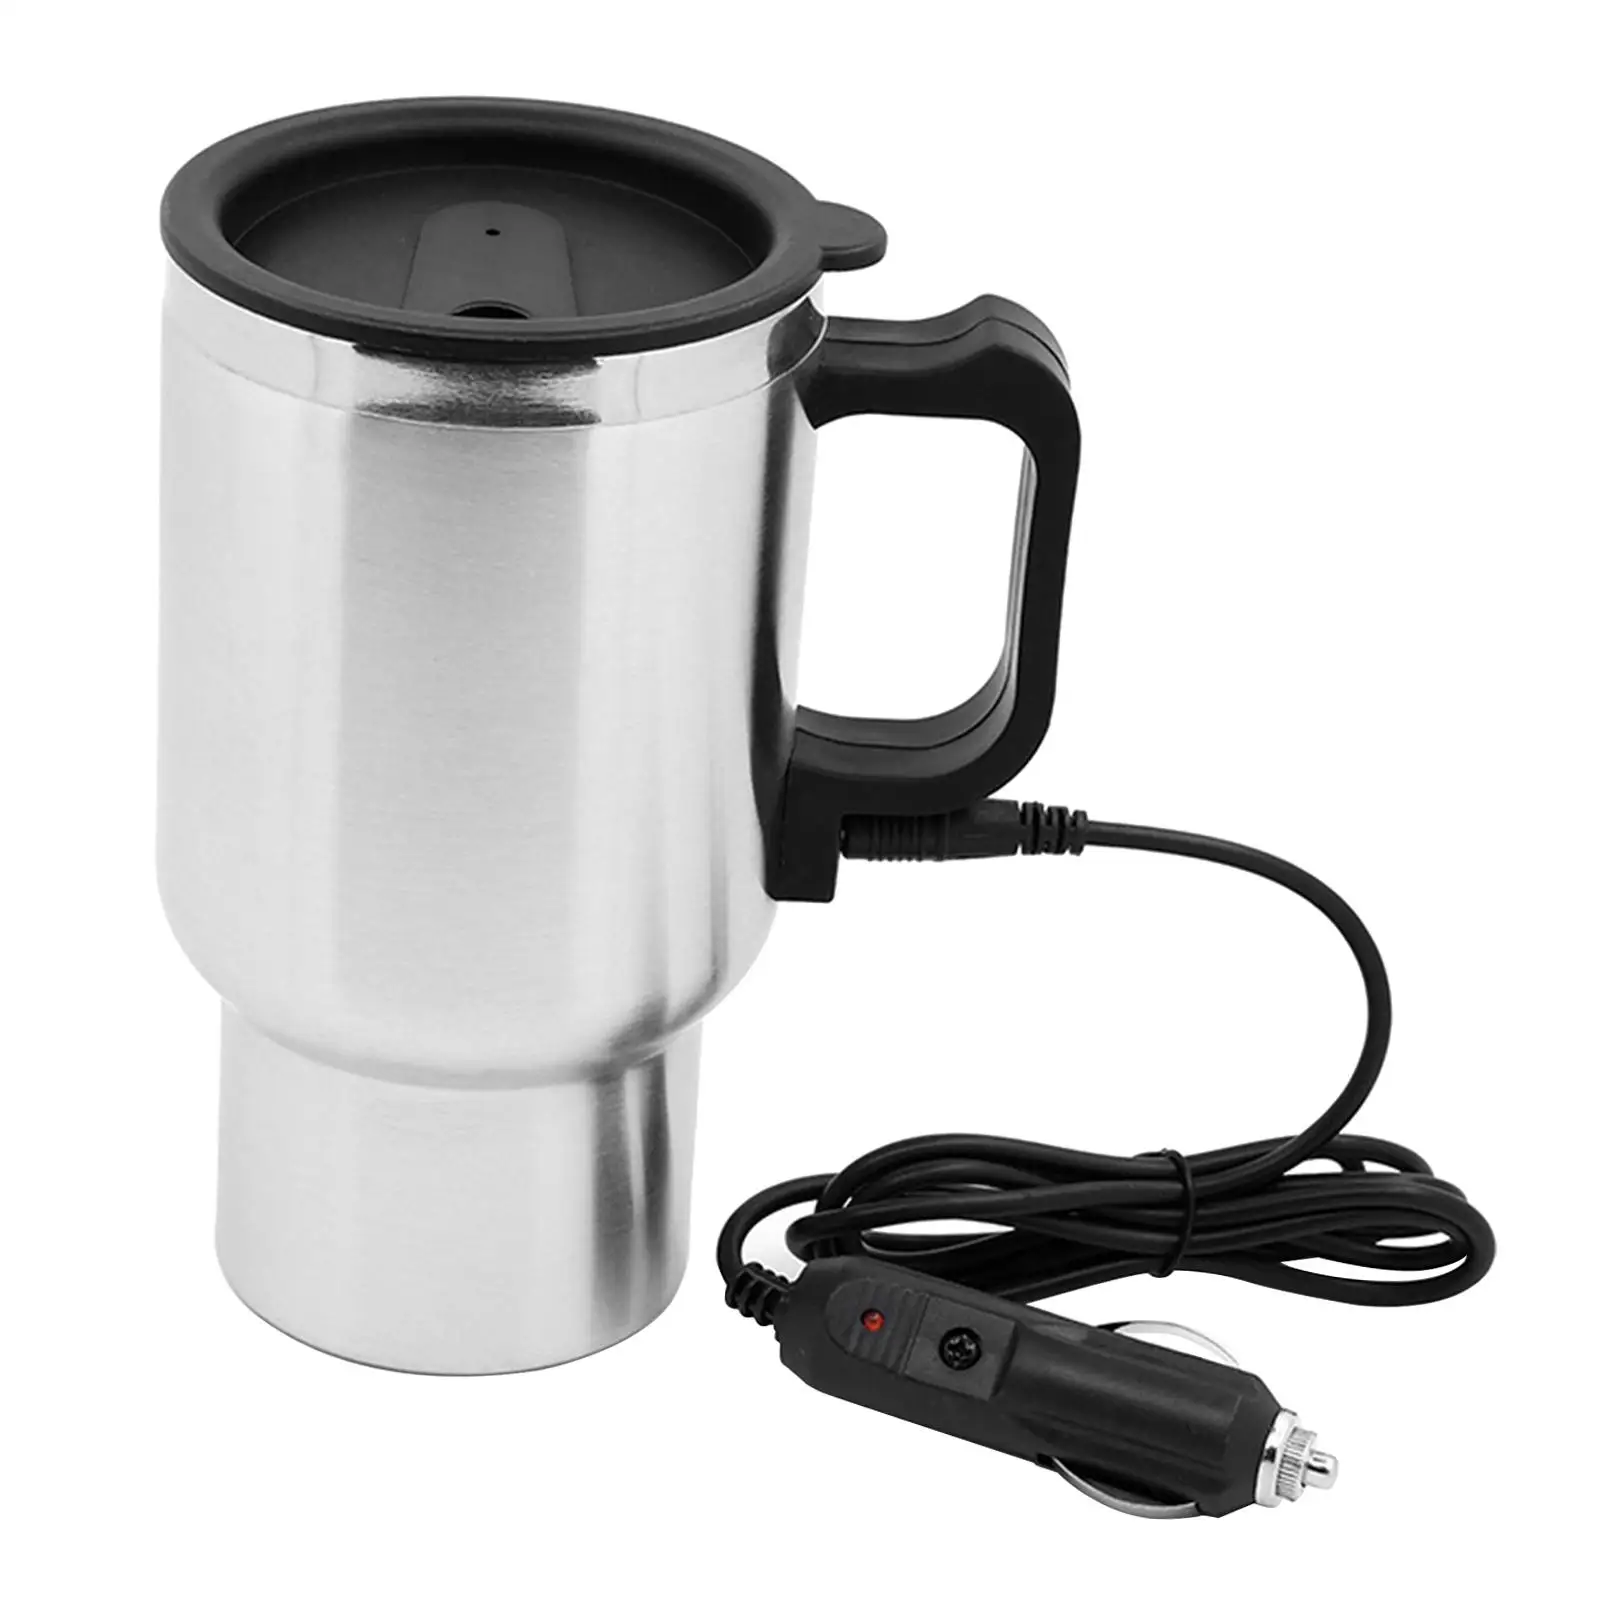 12V Car Heating Cup 500ml Heater Insulated Heated Mug Car Kettle for Tea Heating Water Milk Cars Trucks Coffee